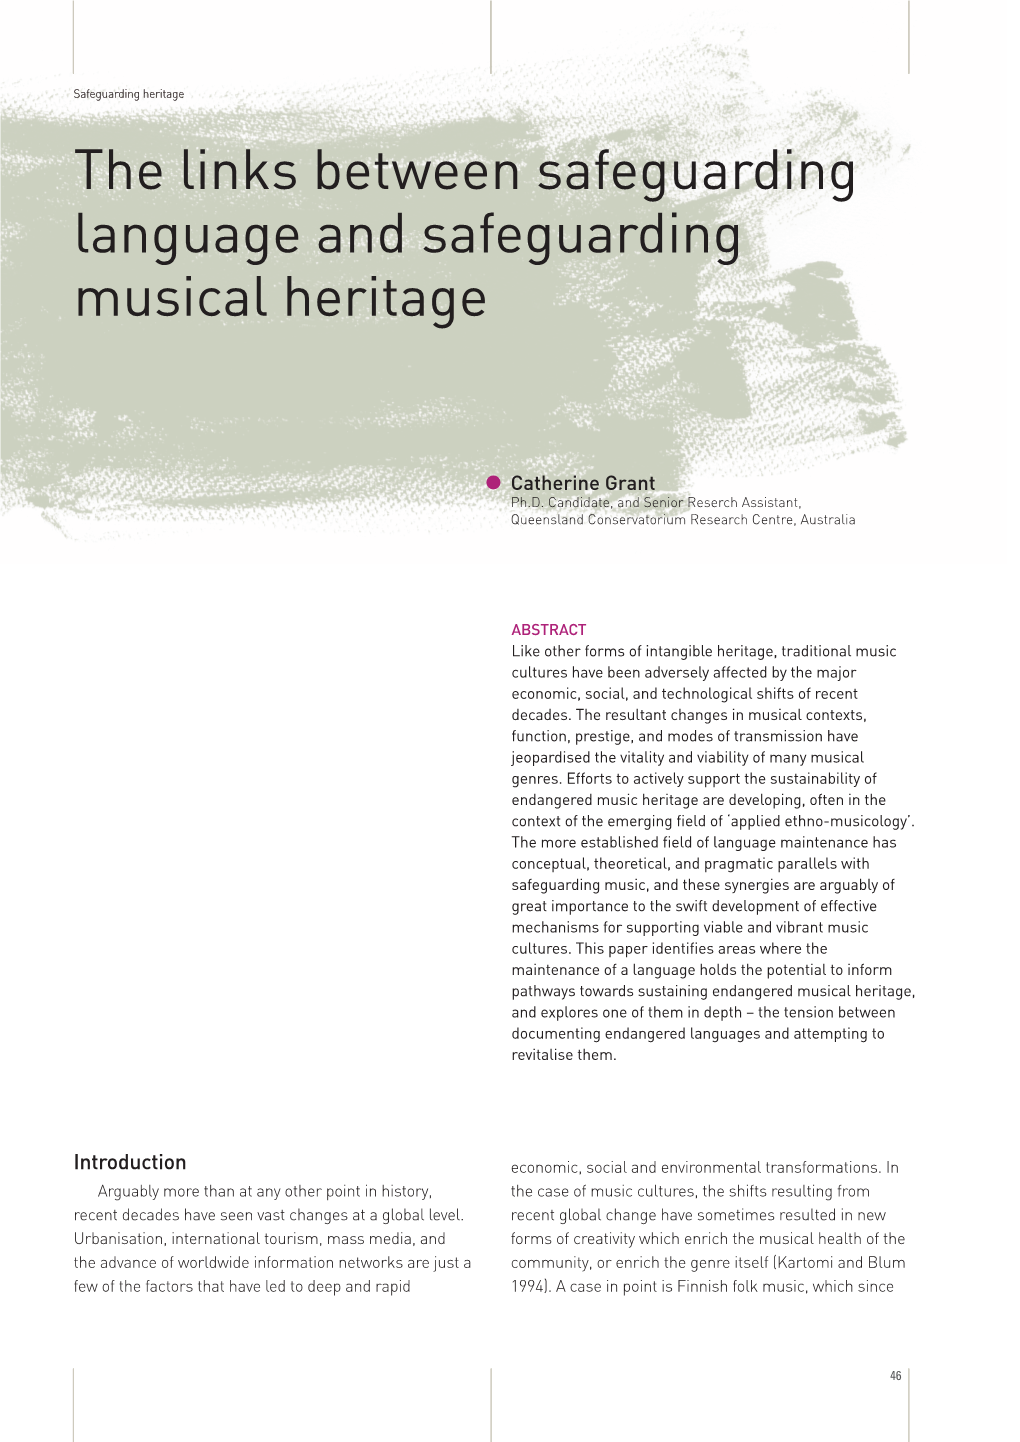 The Links Between Safeguarding Language and Safeguarding Musical Heritage